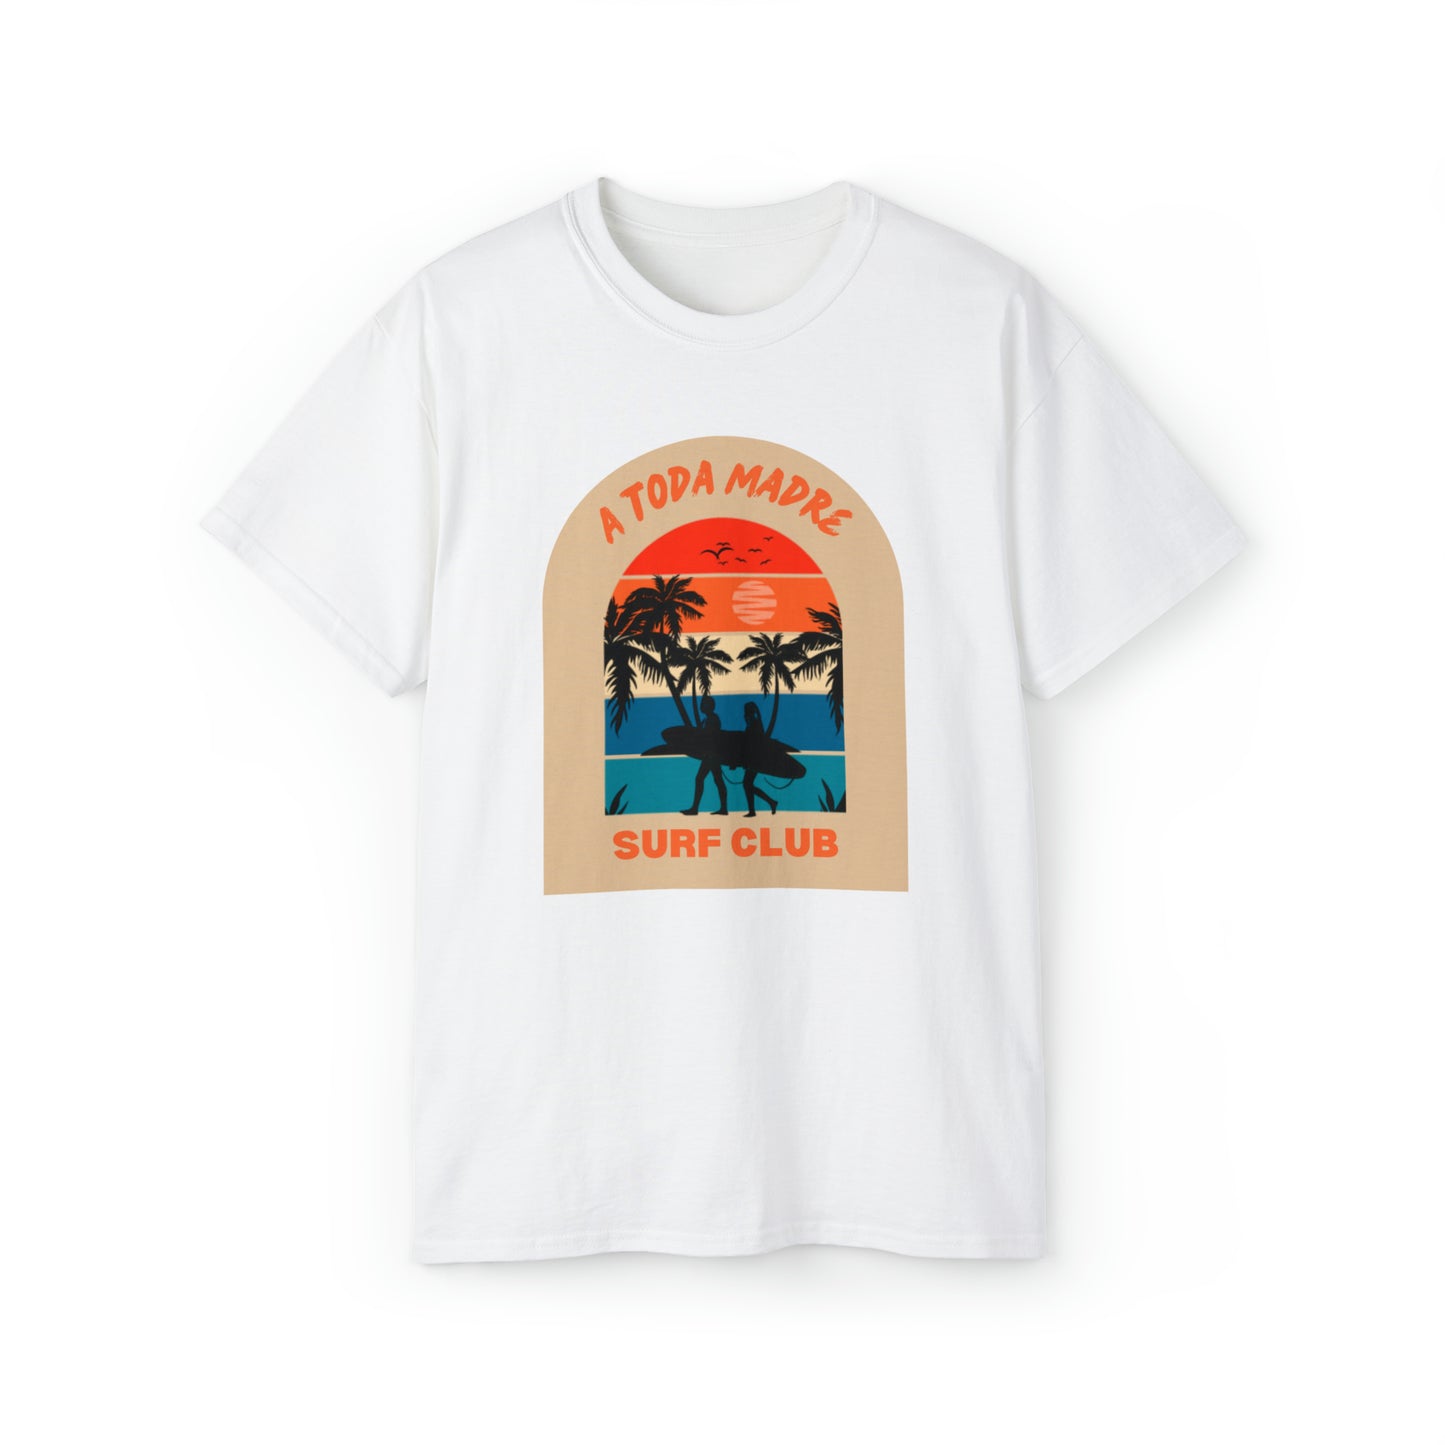 A Toda Madre Surf Club T-Shirt - "Endless Summer"